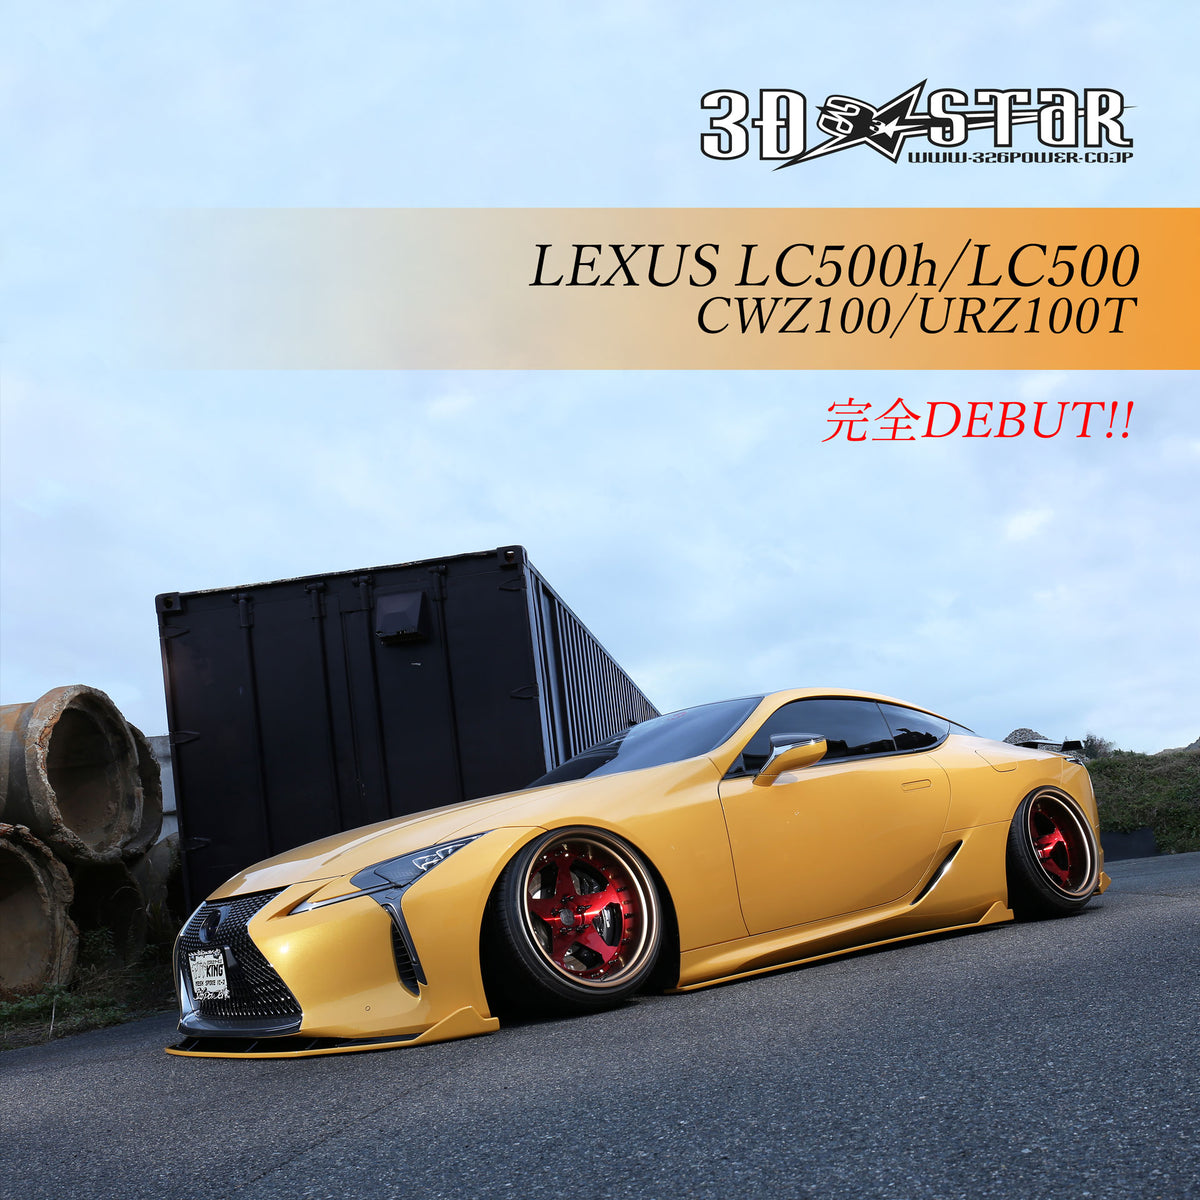 326POWER 3D STAR Lexus LC500 FM326 Lip Aero Kit 